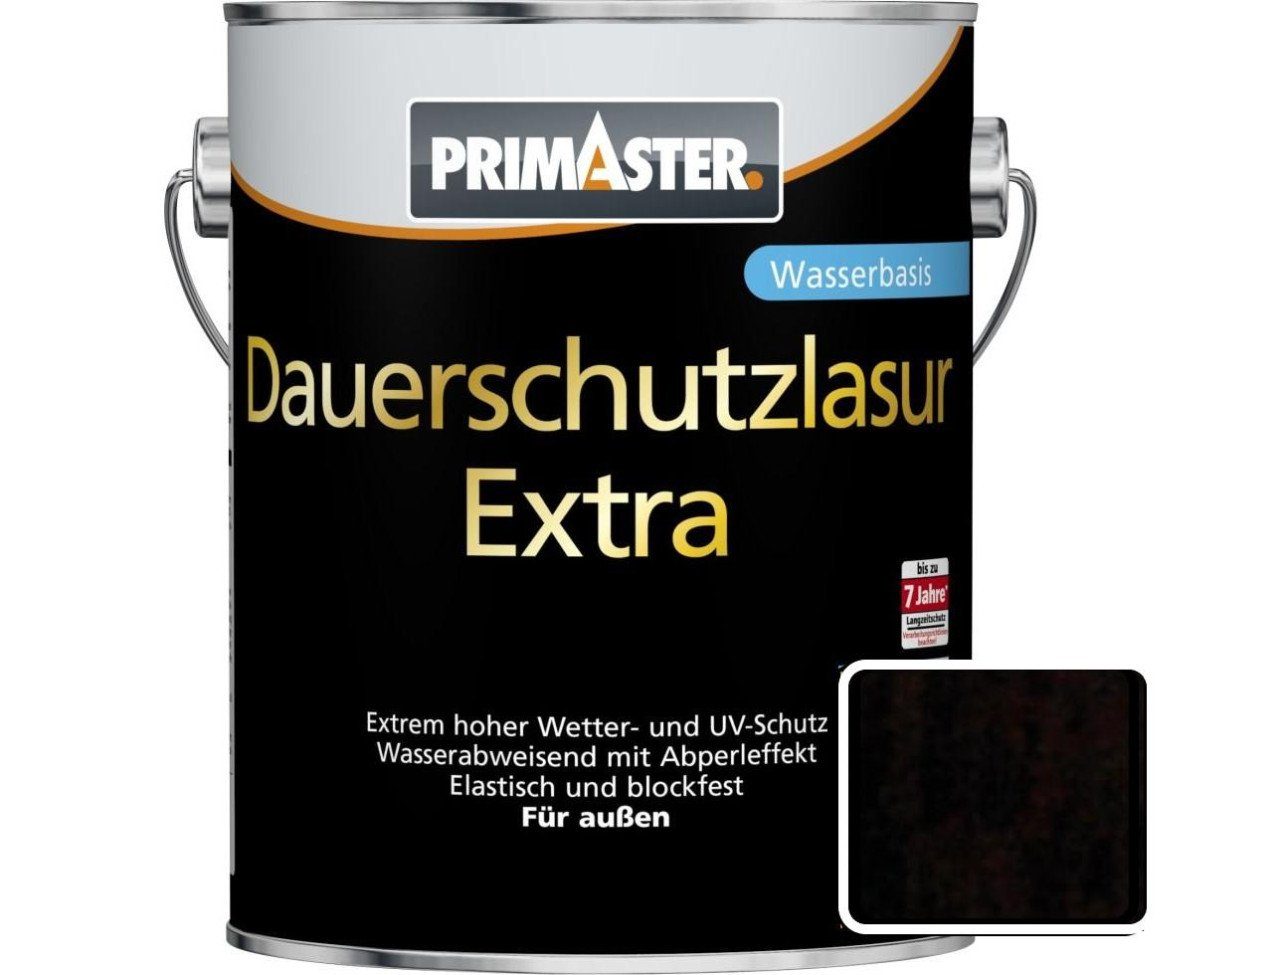 Extra Primaster L Lasur palisander Primaster 5 Dauerschutzlasur